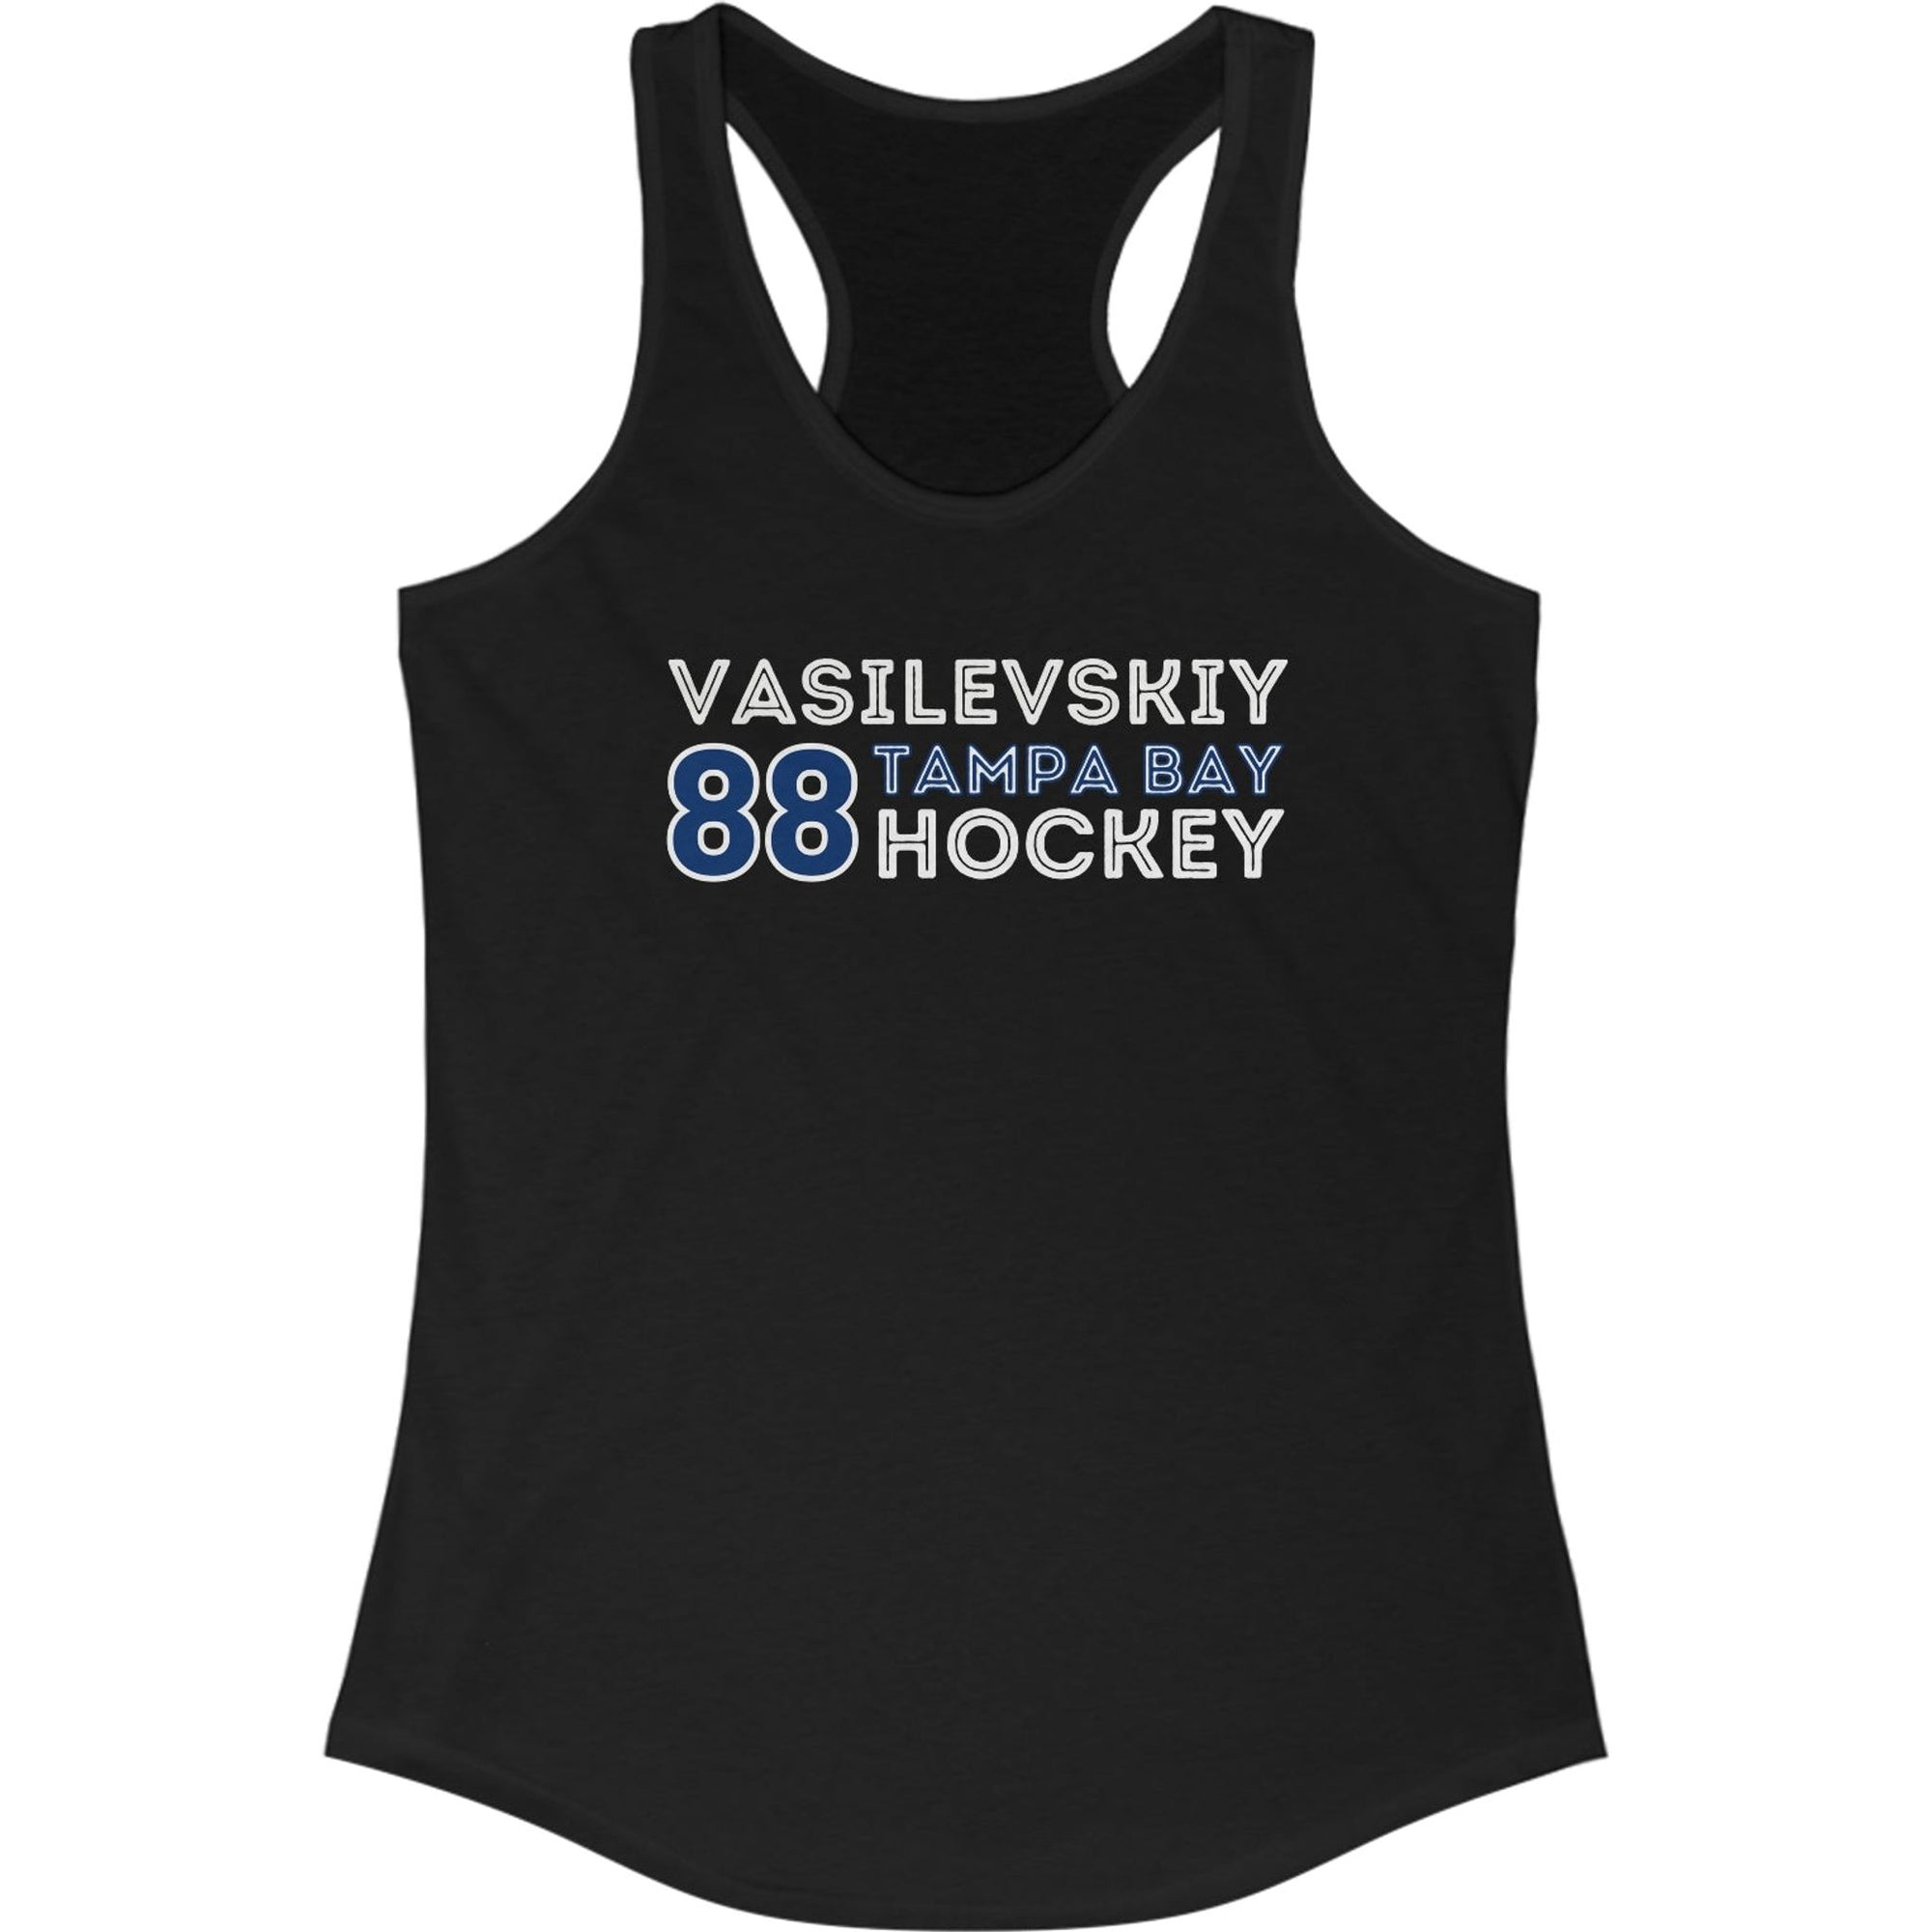 Vasilevskiy 88 Tampa Bay Hockey Grafitti Wall Design Women's Ideal Racerback Tank Top